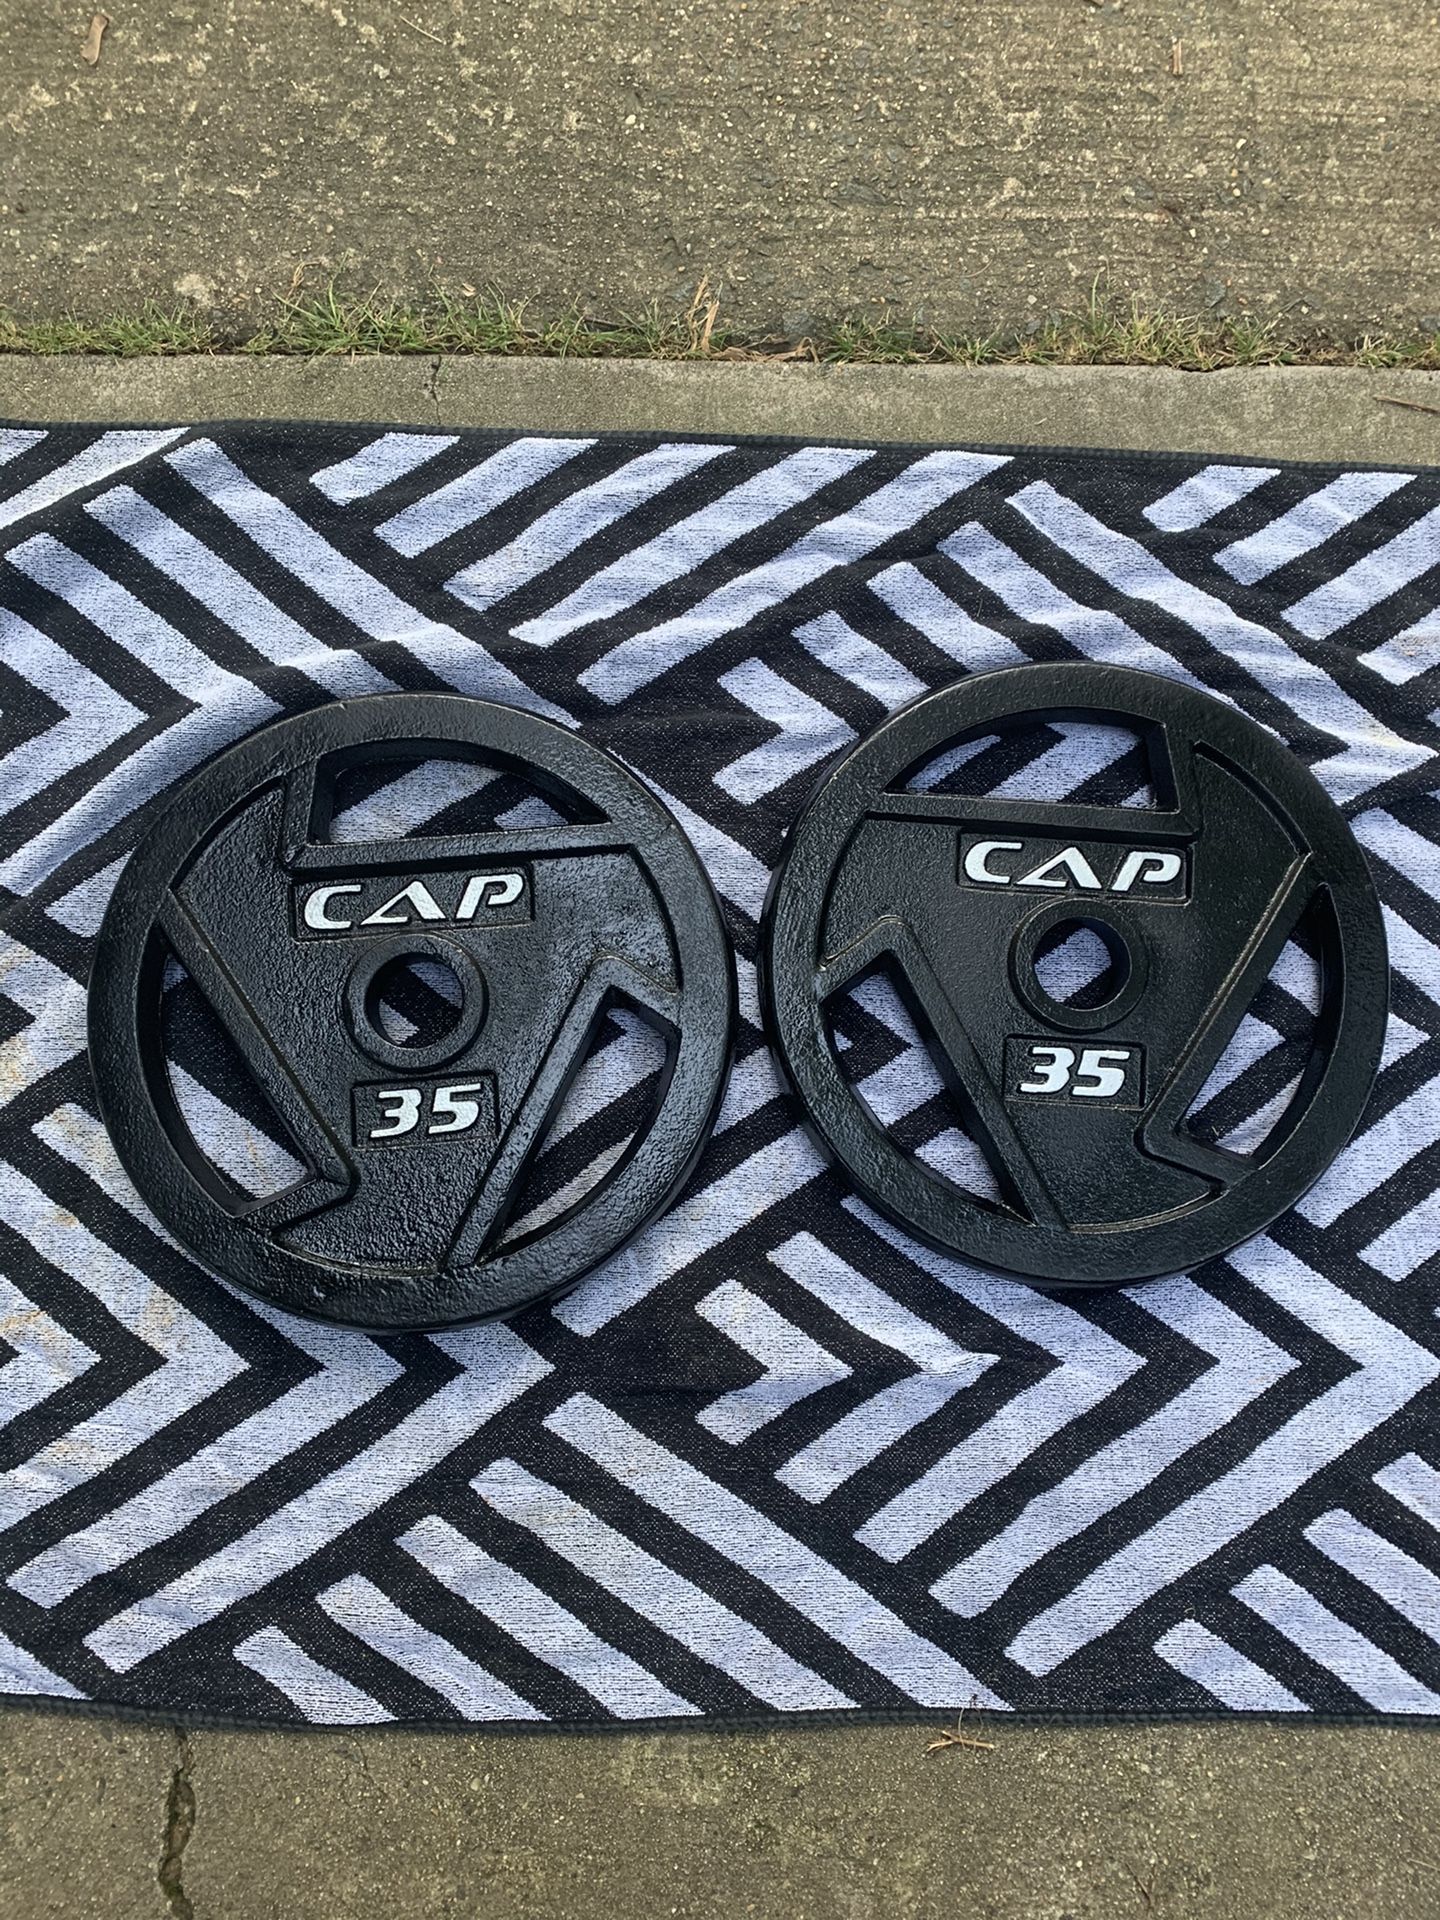 CAP Barbell Weight Plates 35lb Pair